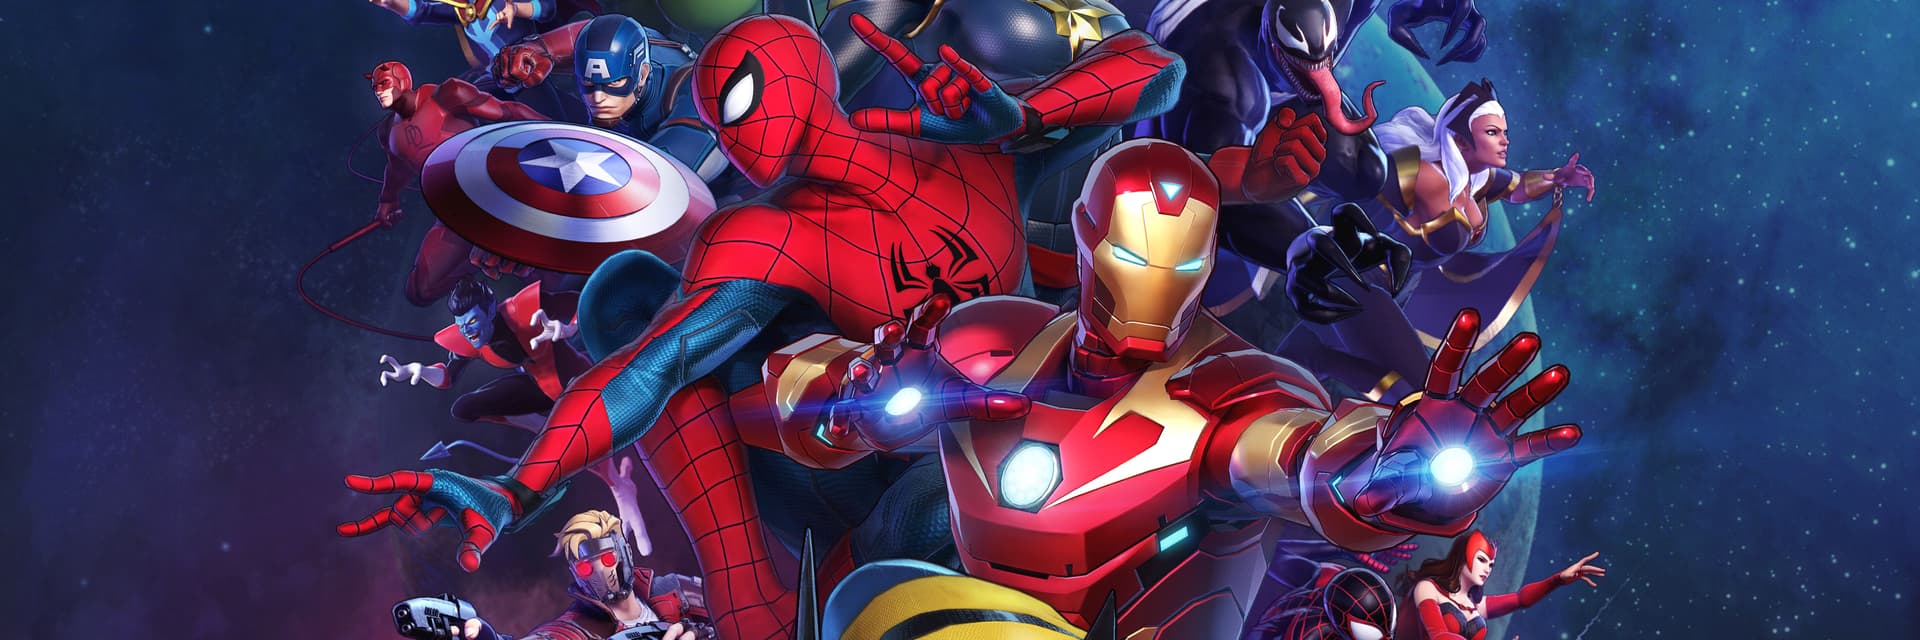 Marvel Ultimate Alliance 3 Game Poster